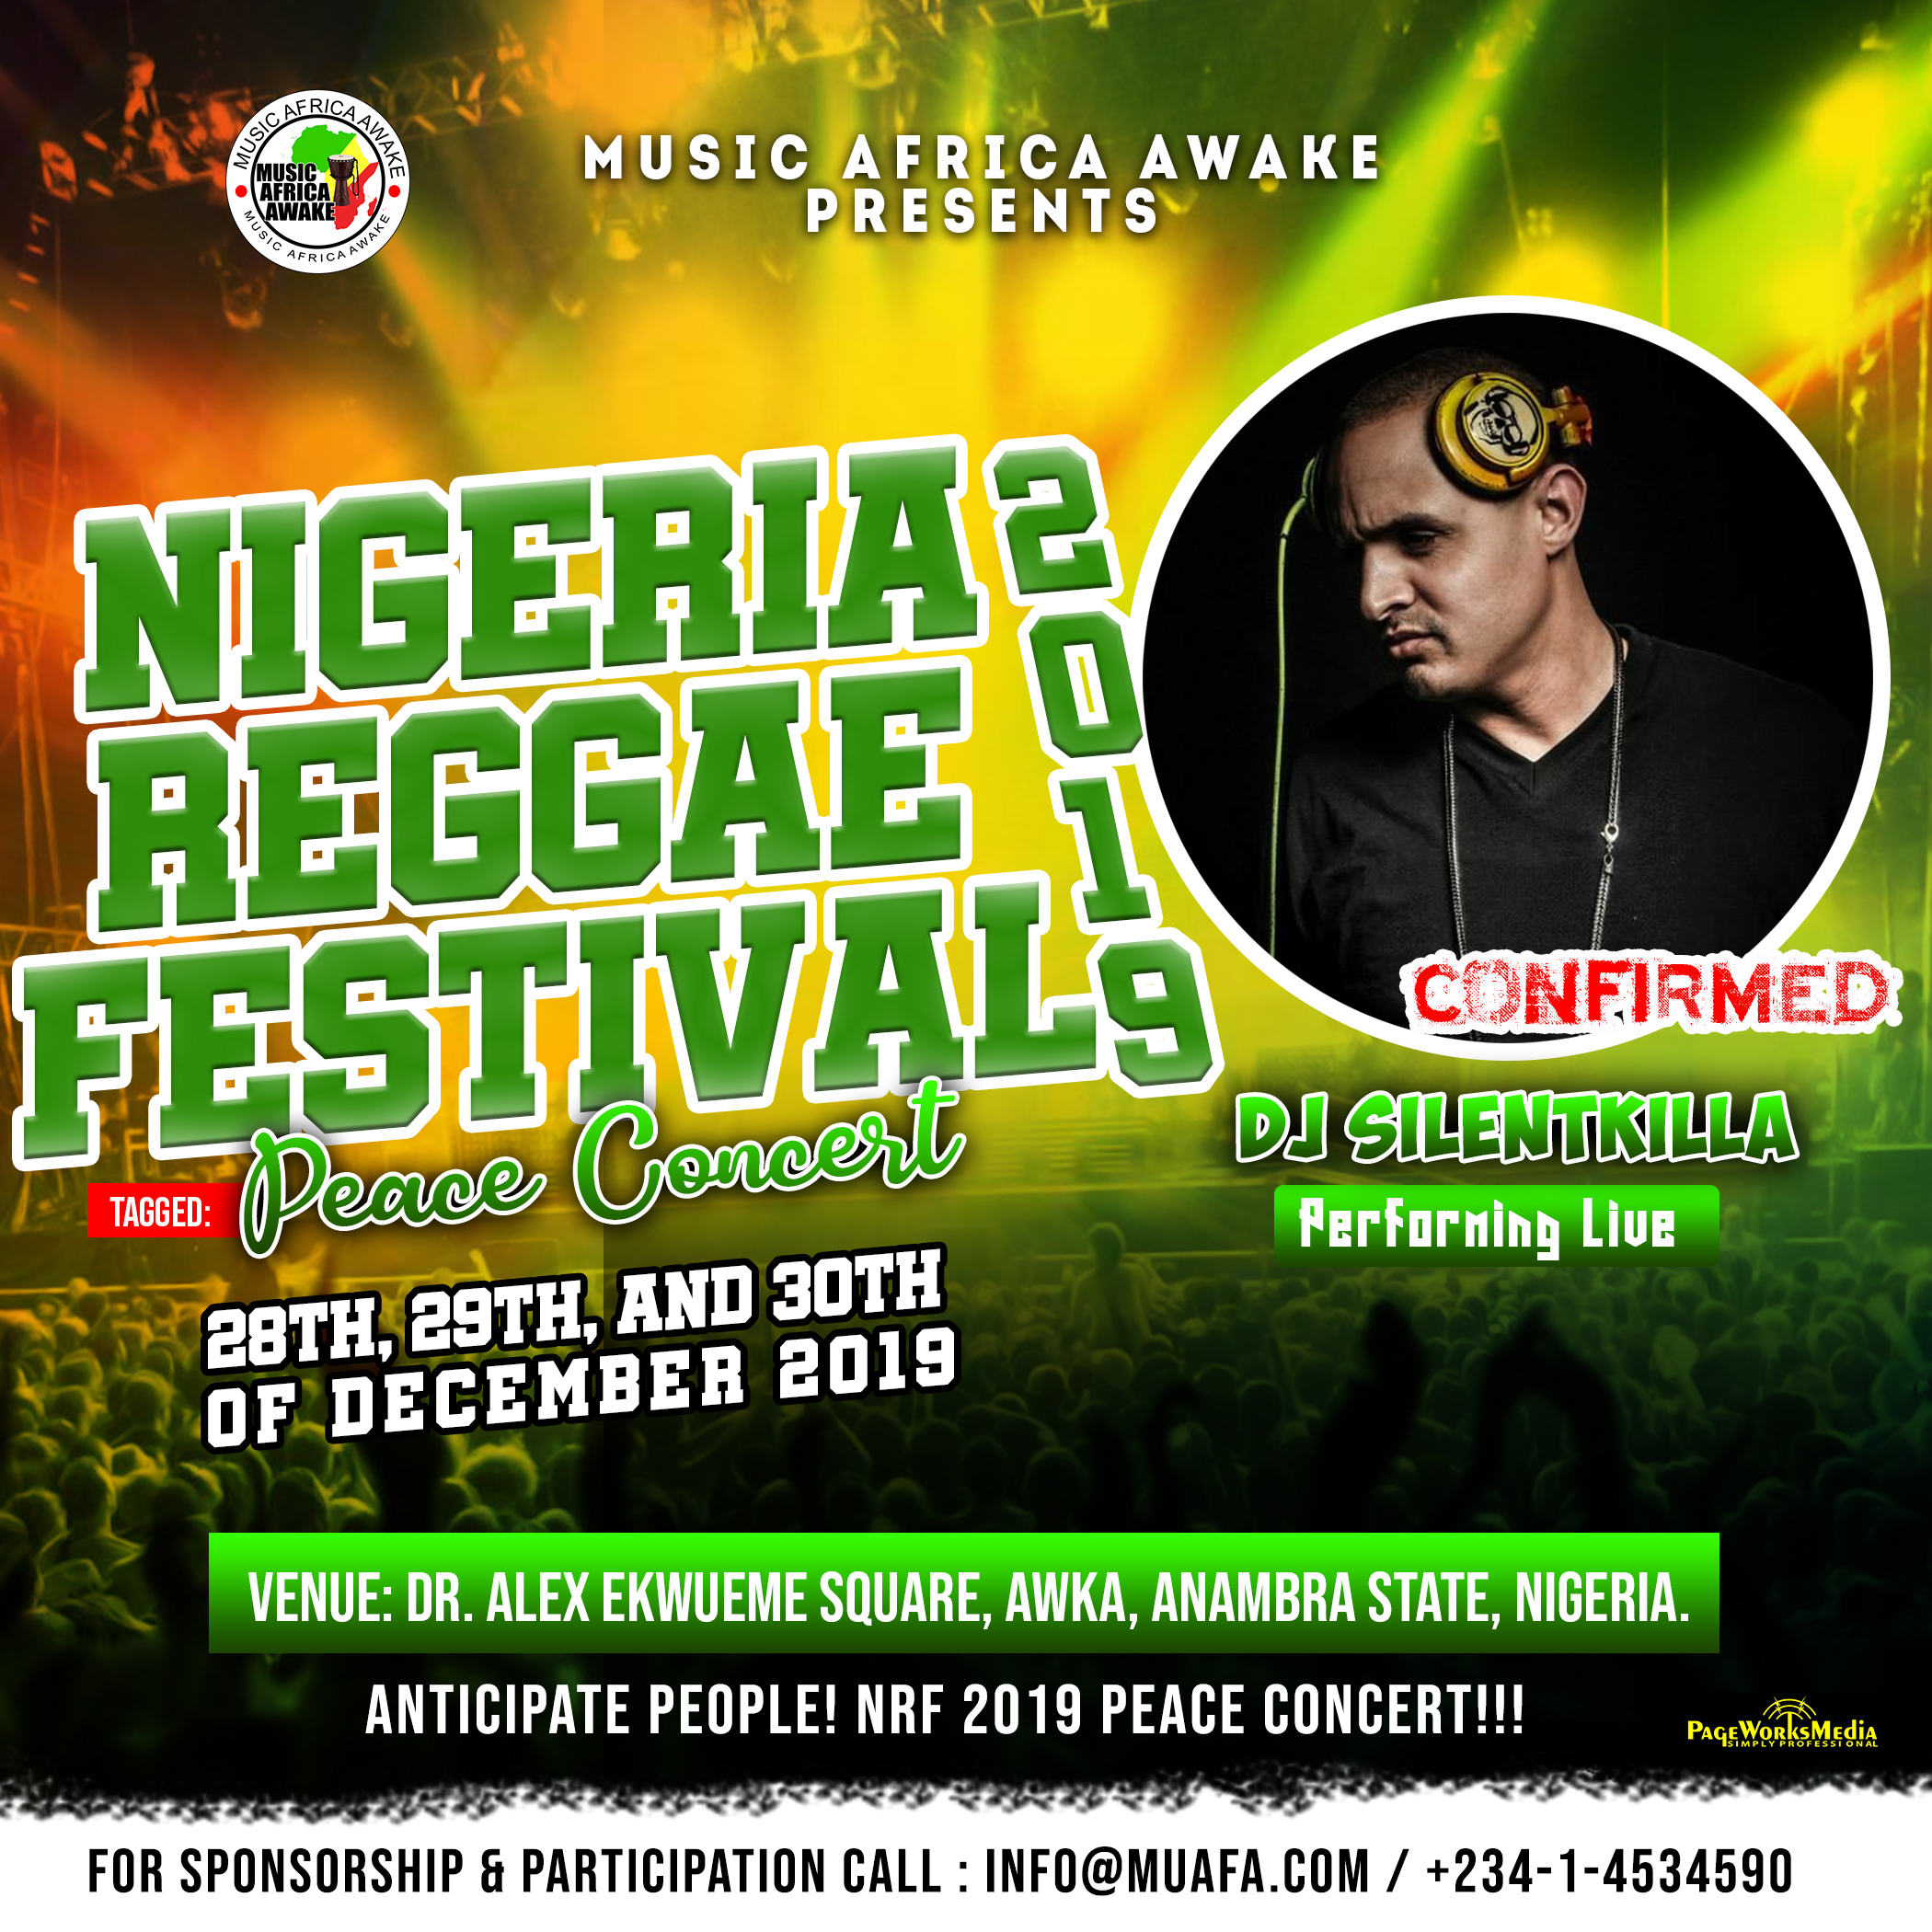 DJ SilentKilla to perform live at the Nigeria Reggae Festival 2019